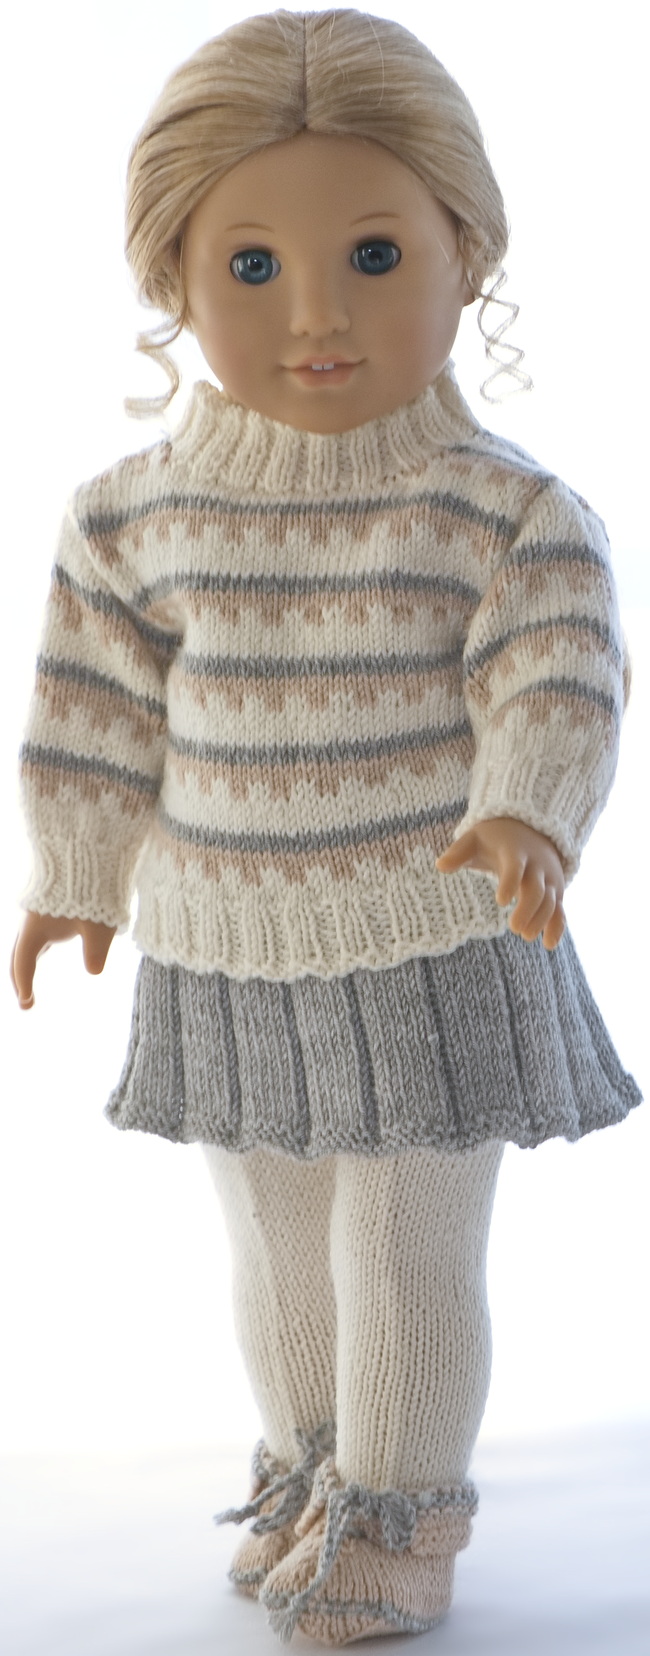 0247d-05-doll-sweater-knitting-pattern.jpg